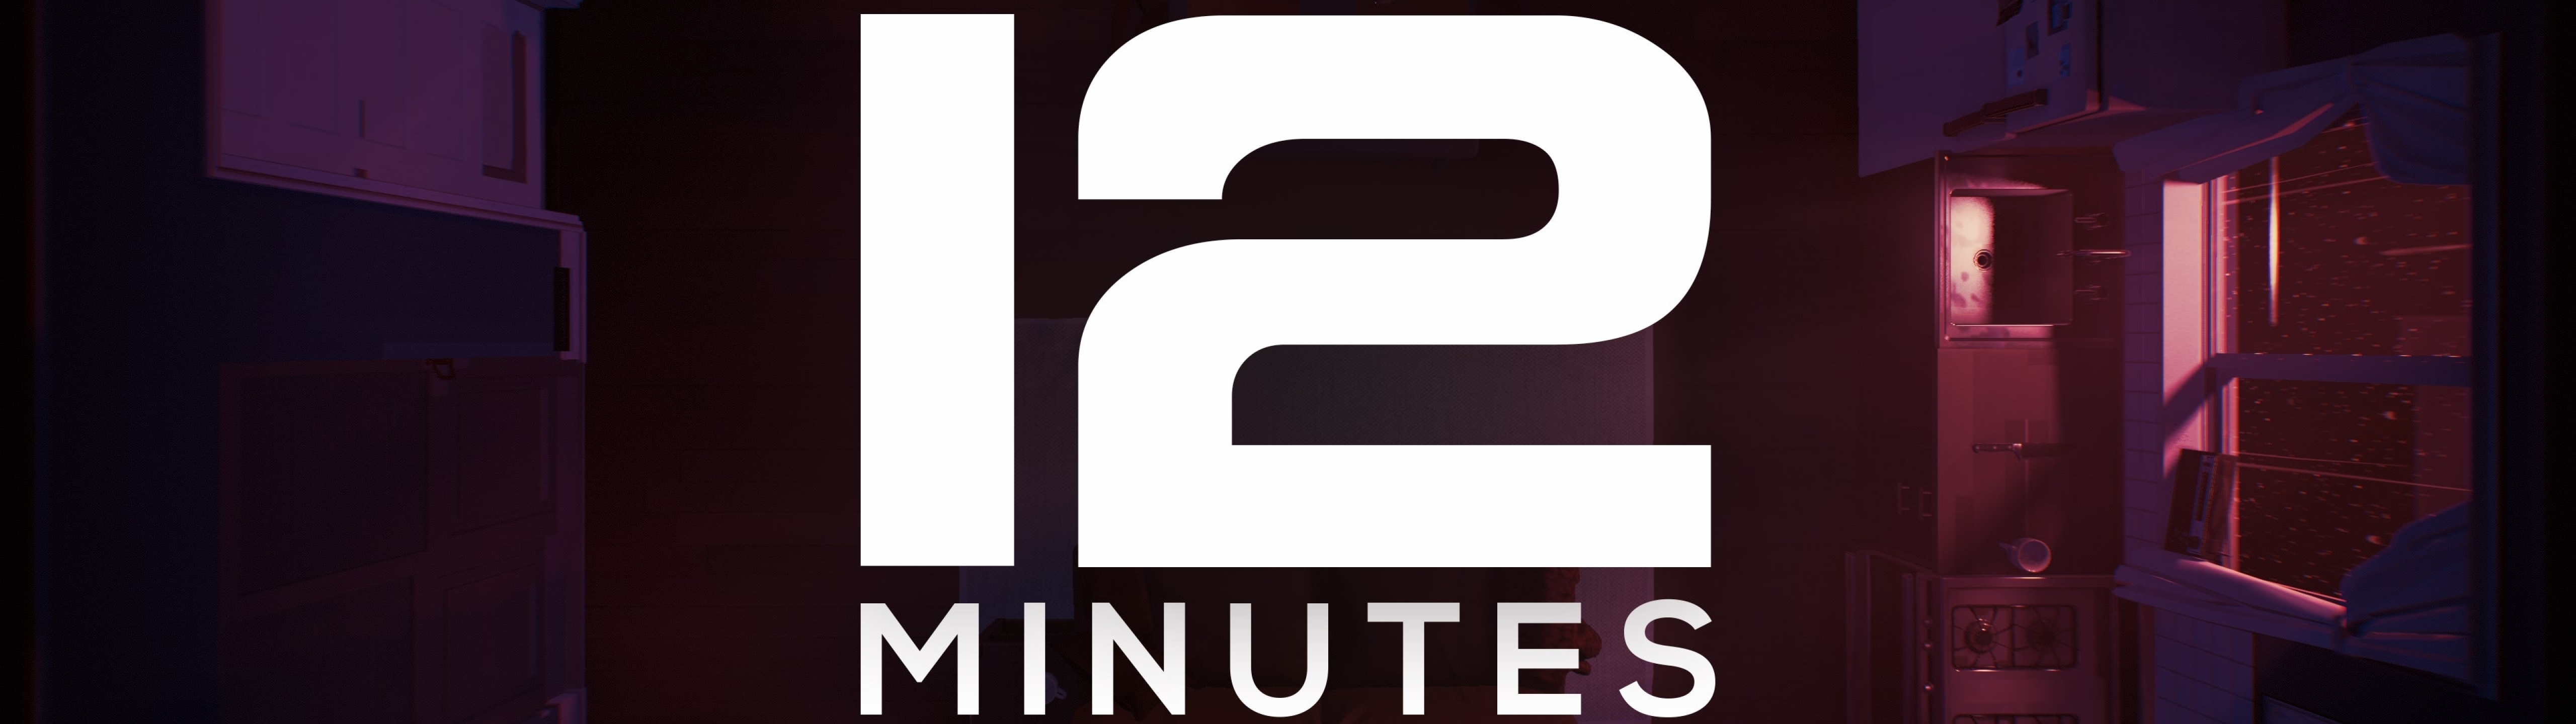 Минута обложка. Twelve minutes обложка. 12 Minutes игра. Steam 12 minutes. Twelve minutes game Wallpaper.